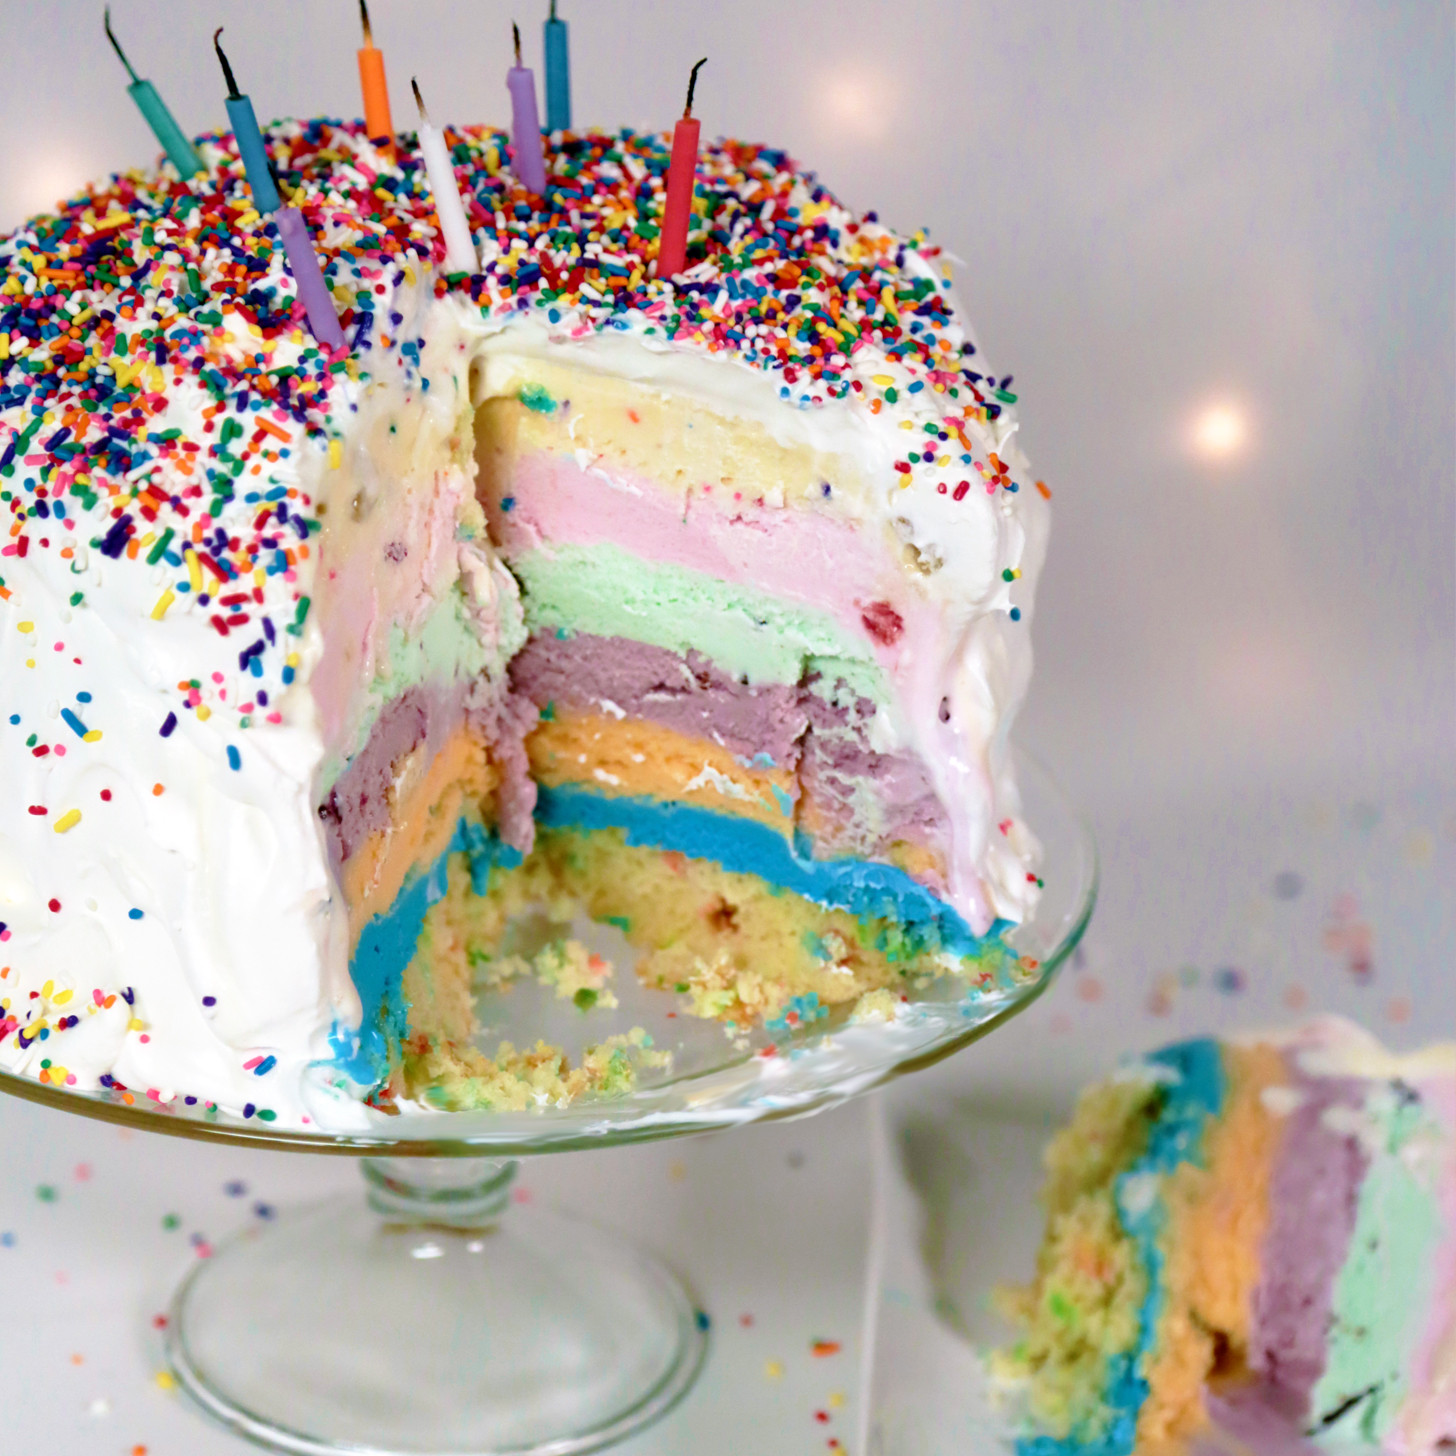 Best ideas about Birthday Cake Ice Cream Recipe
. Save or Pin Birthday Ice Cream Cake Recipe Video Now.